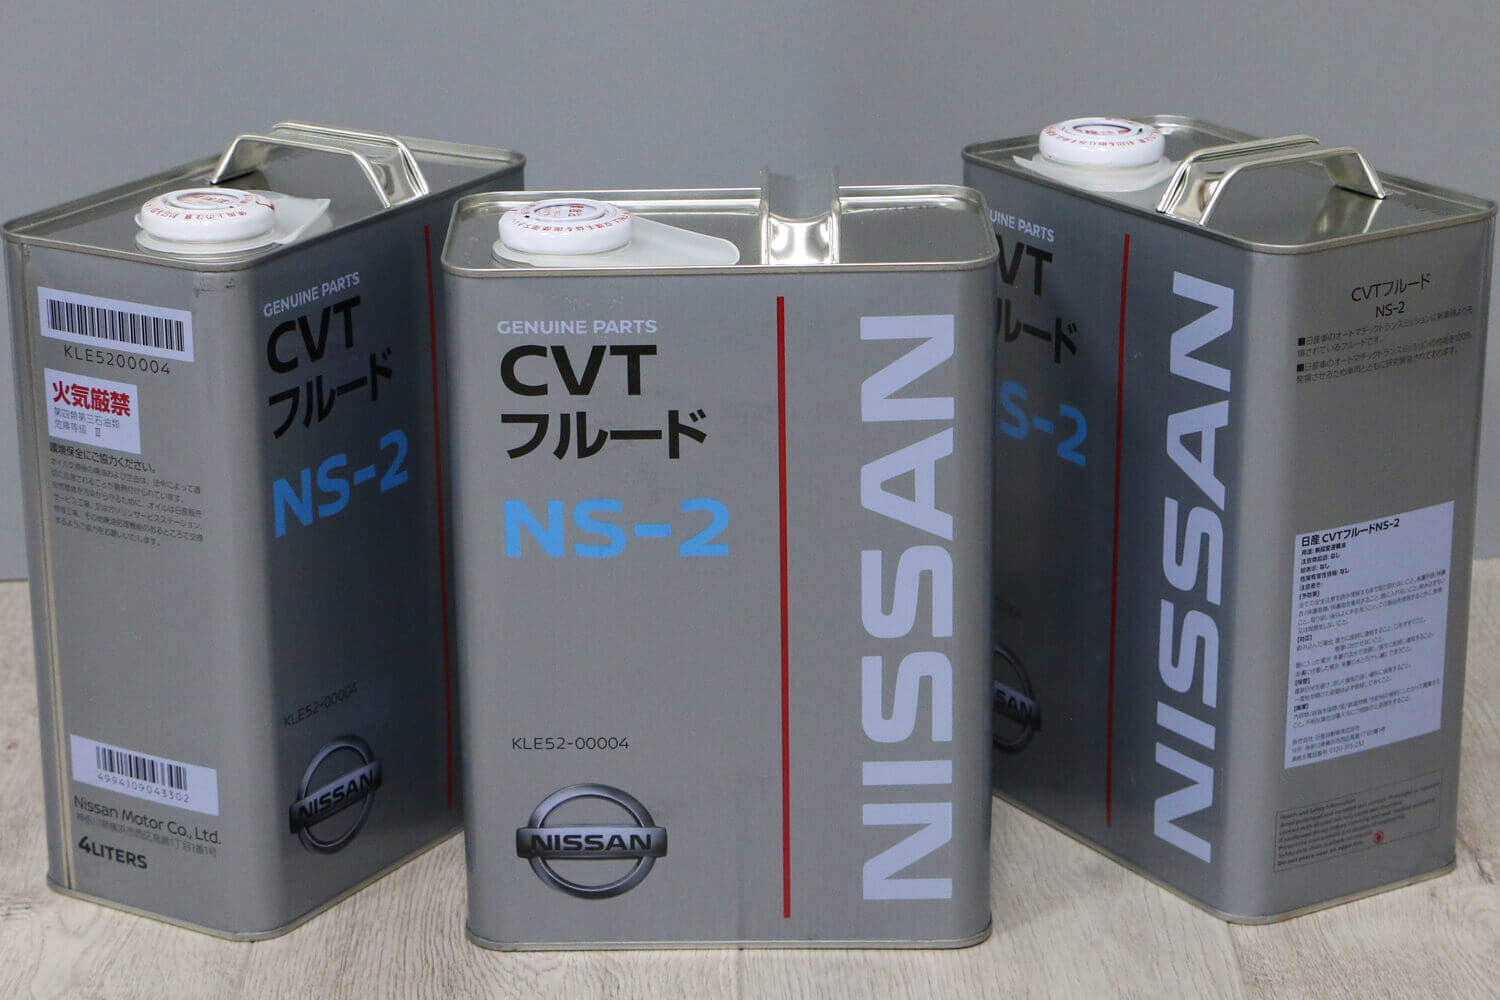 Масло ниссан ns2. Nissan CVT NS-2 4л. Nissan kle52-0004. Масло Nissan CVT NS-2. Ns2 масло на Ниссан артикул.